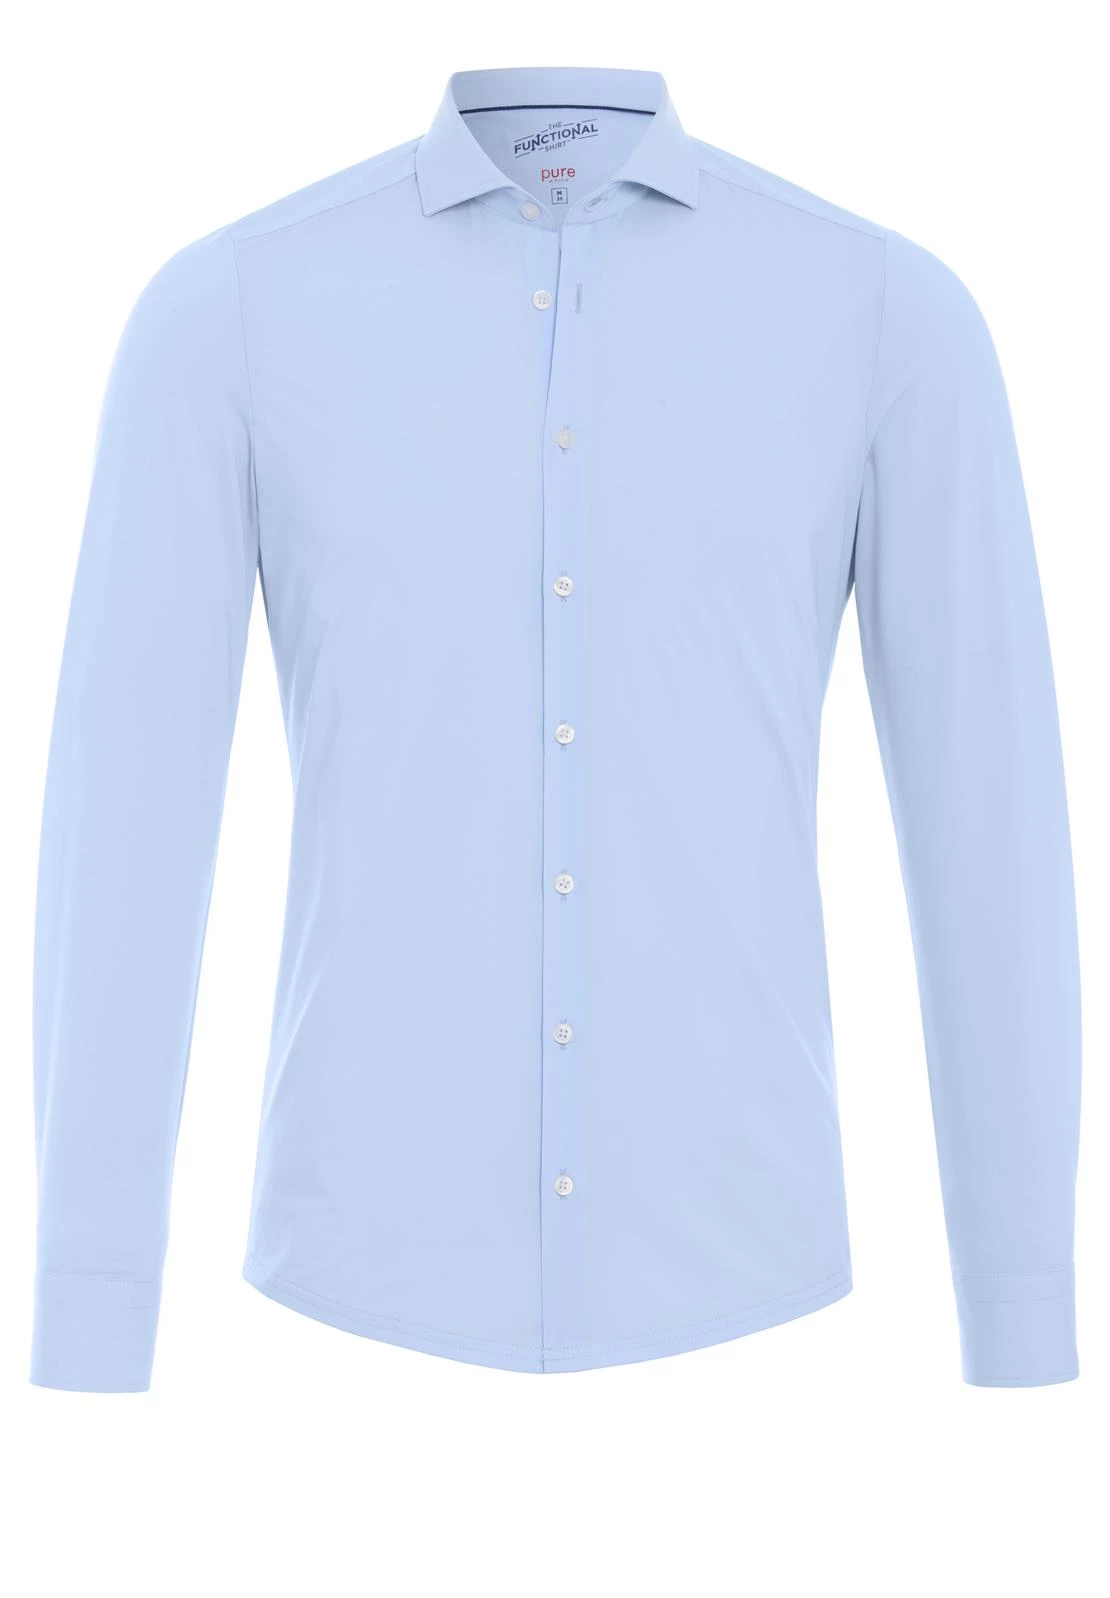 Pure | functional shirt longsleeve plain light blue